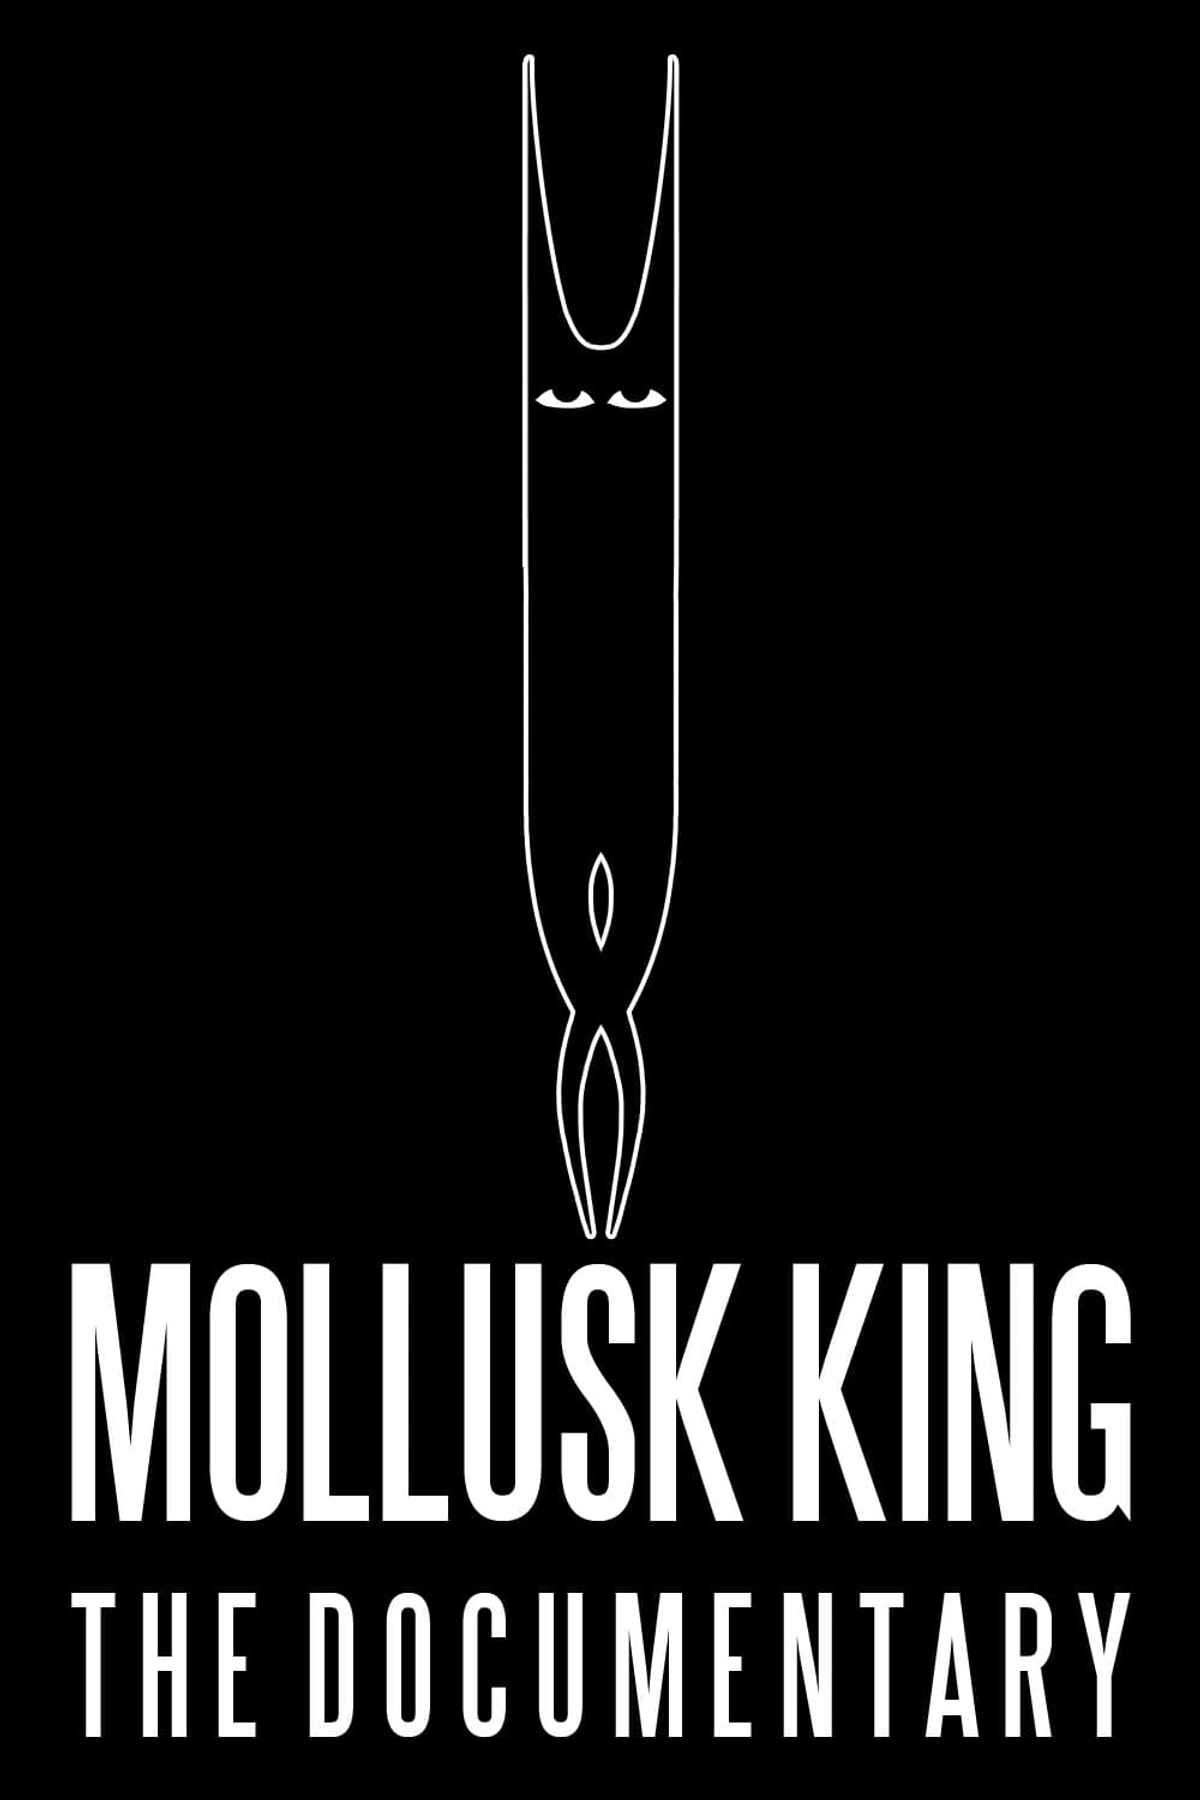 Mollusk King: The Documentary